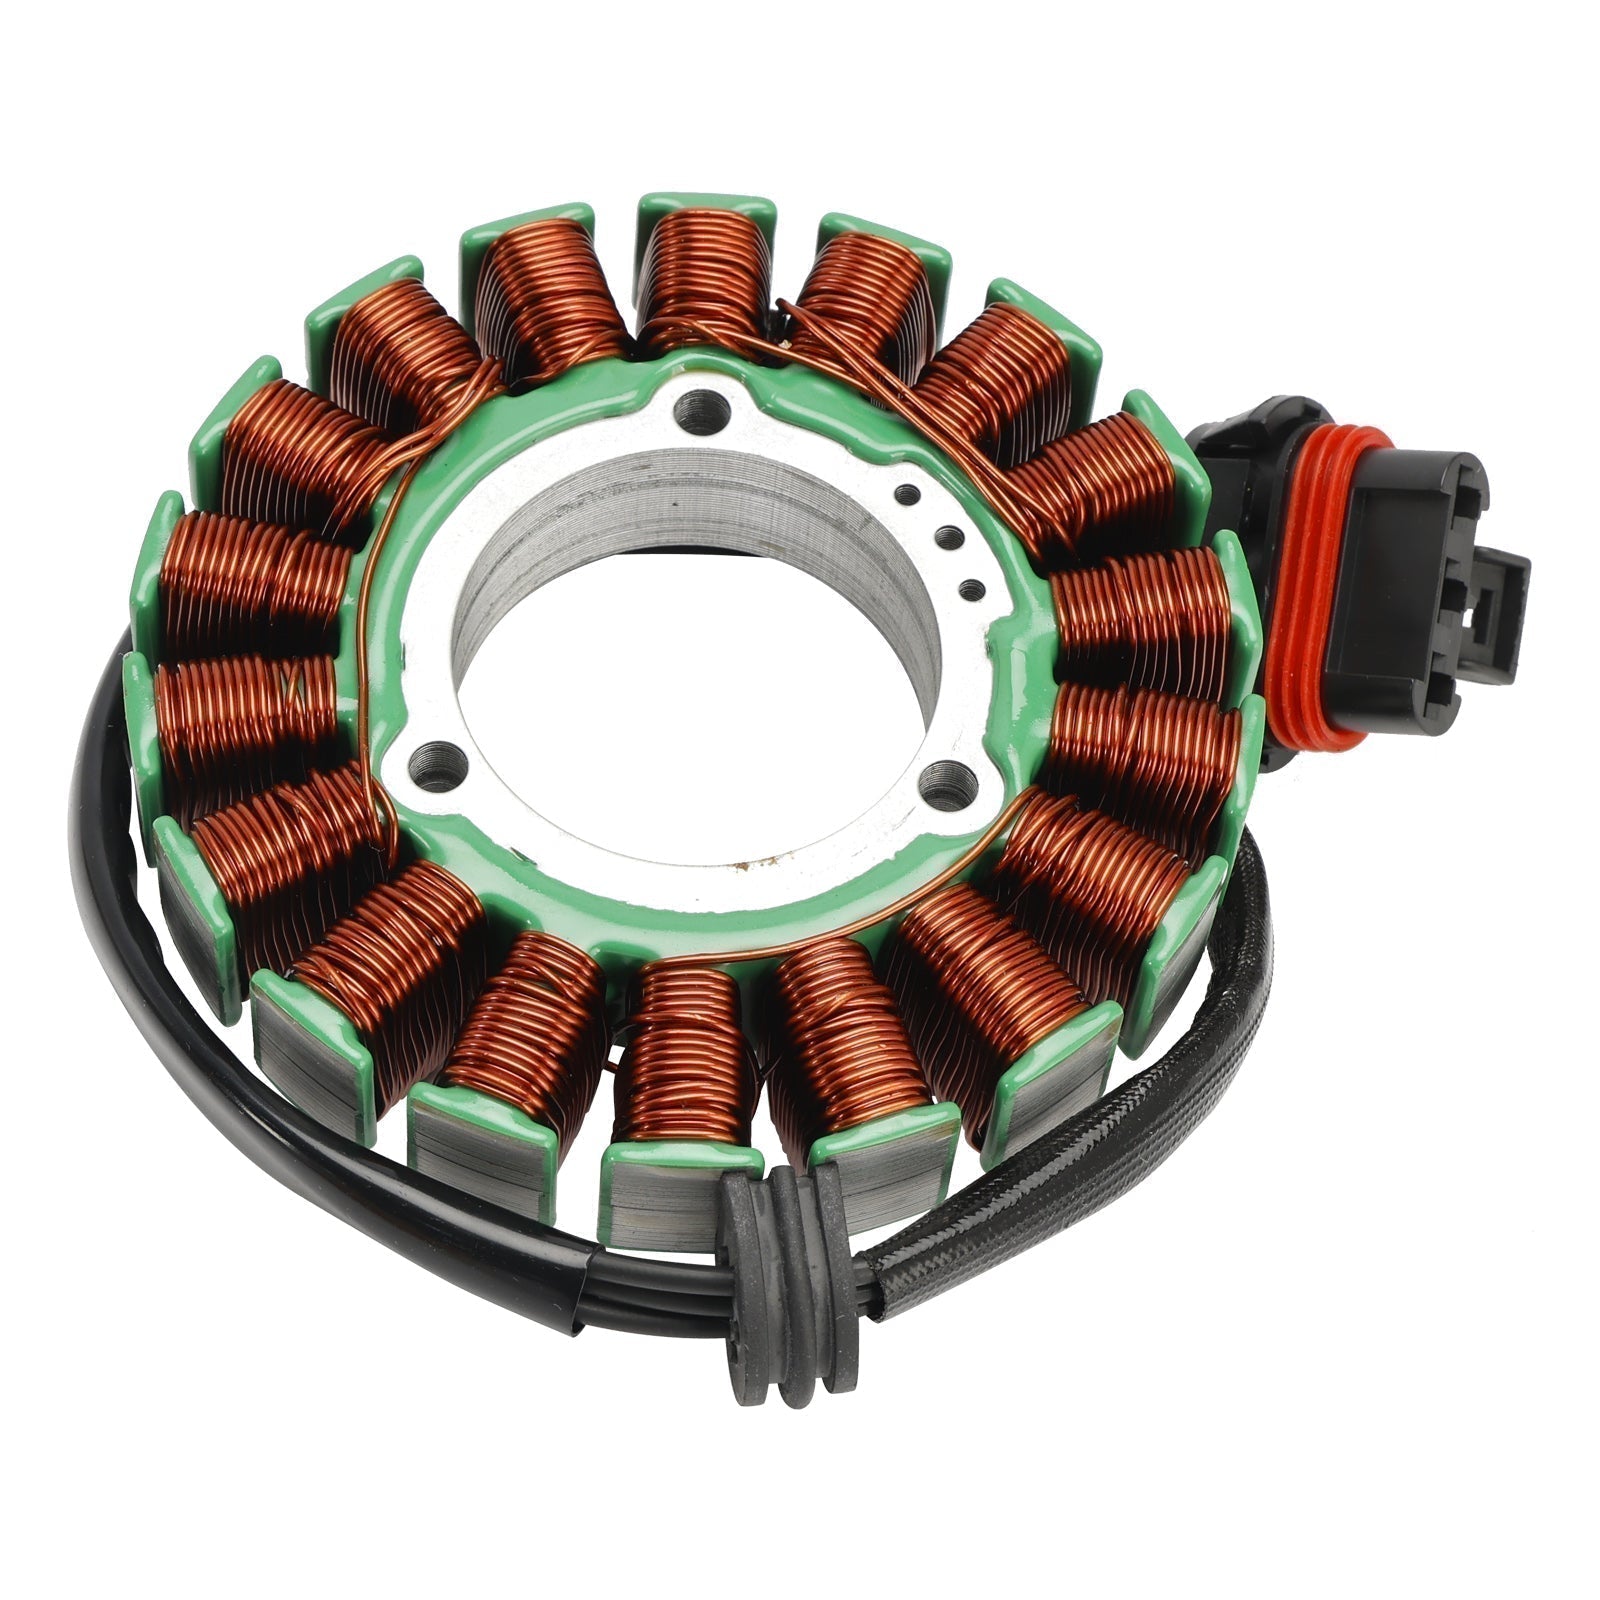 Estator de bobina magnética Polaris RZR Turbo S4 2021 + regulador de voltaje + conjunto de juntas 1000-4013970-4013970